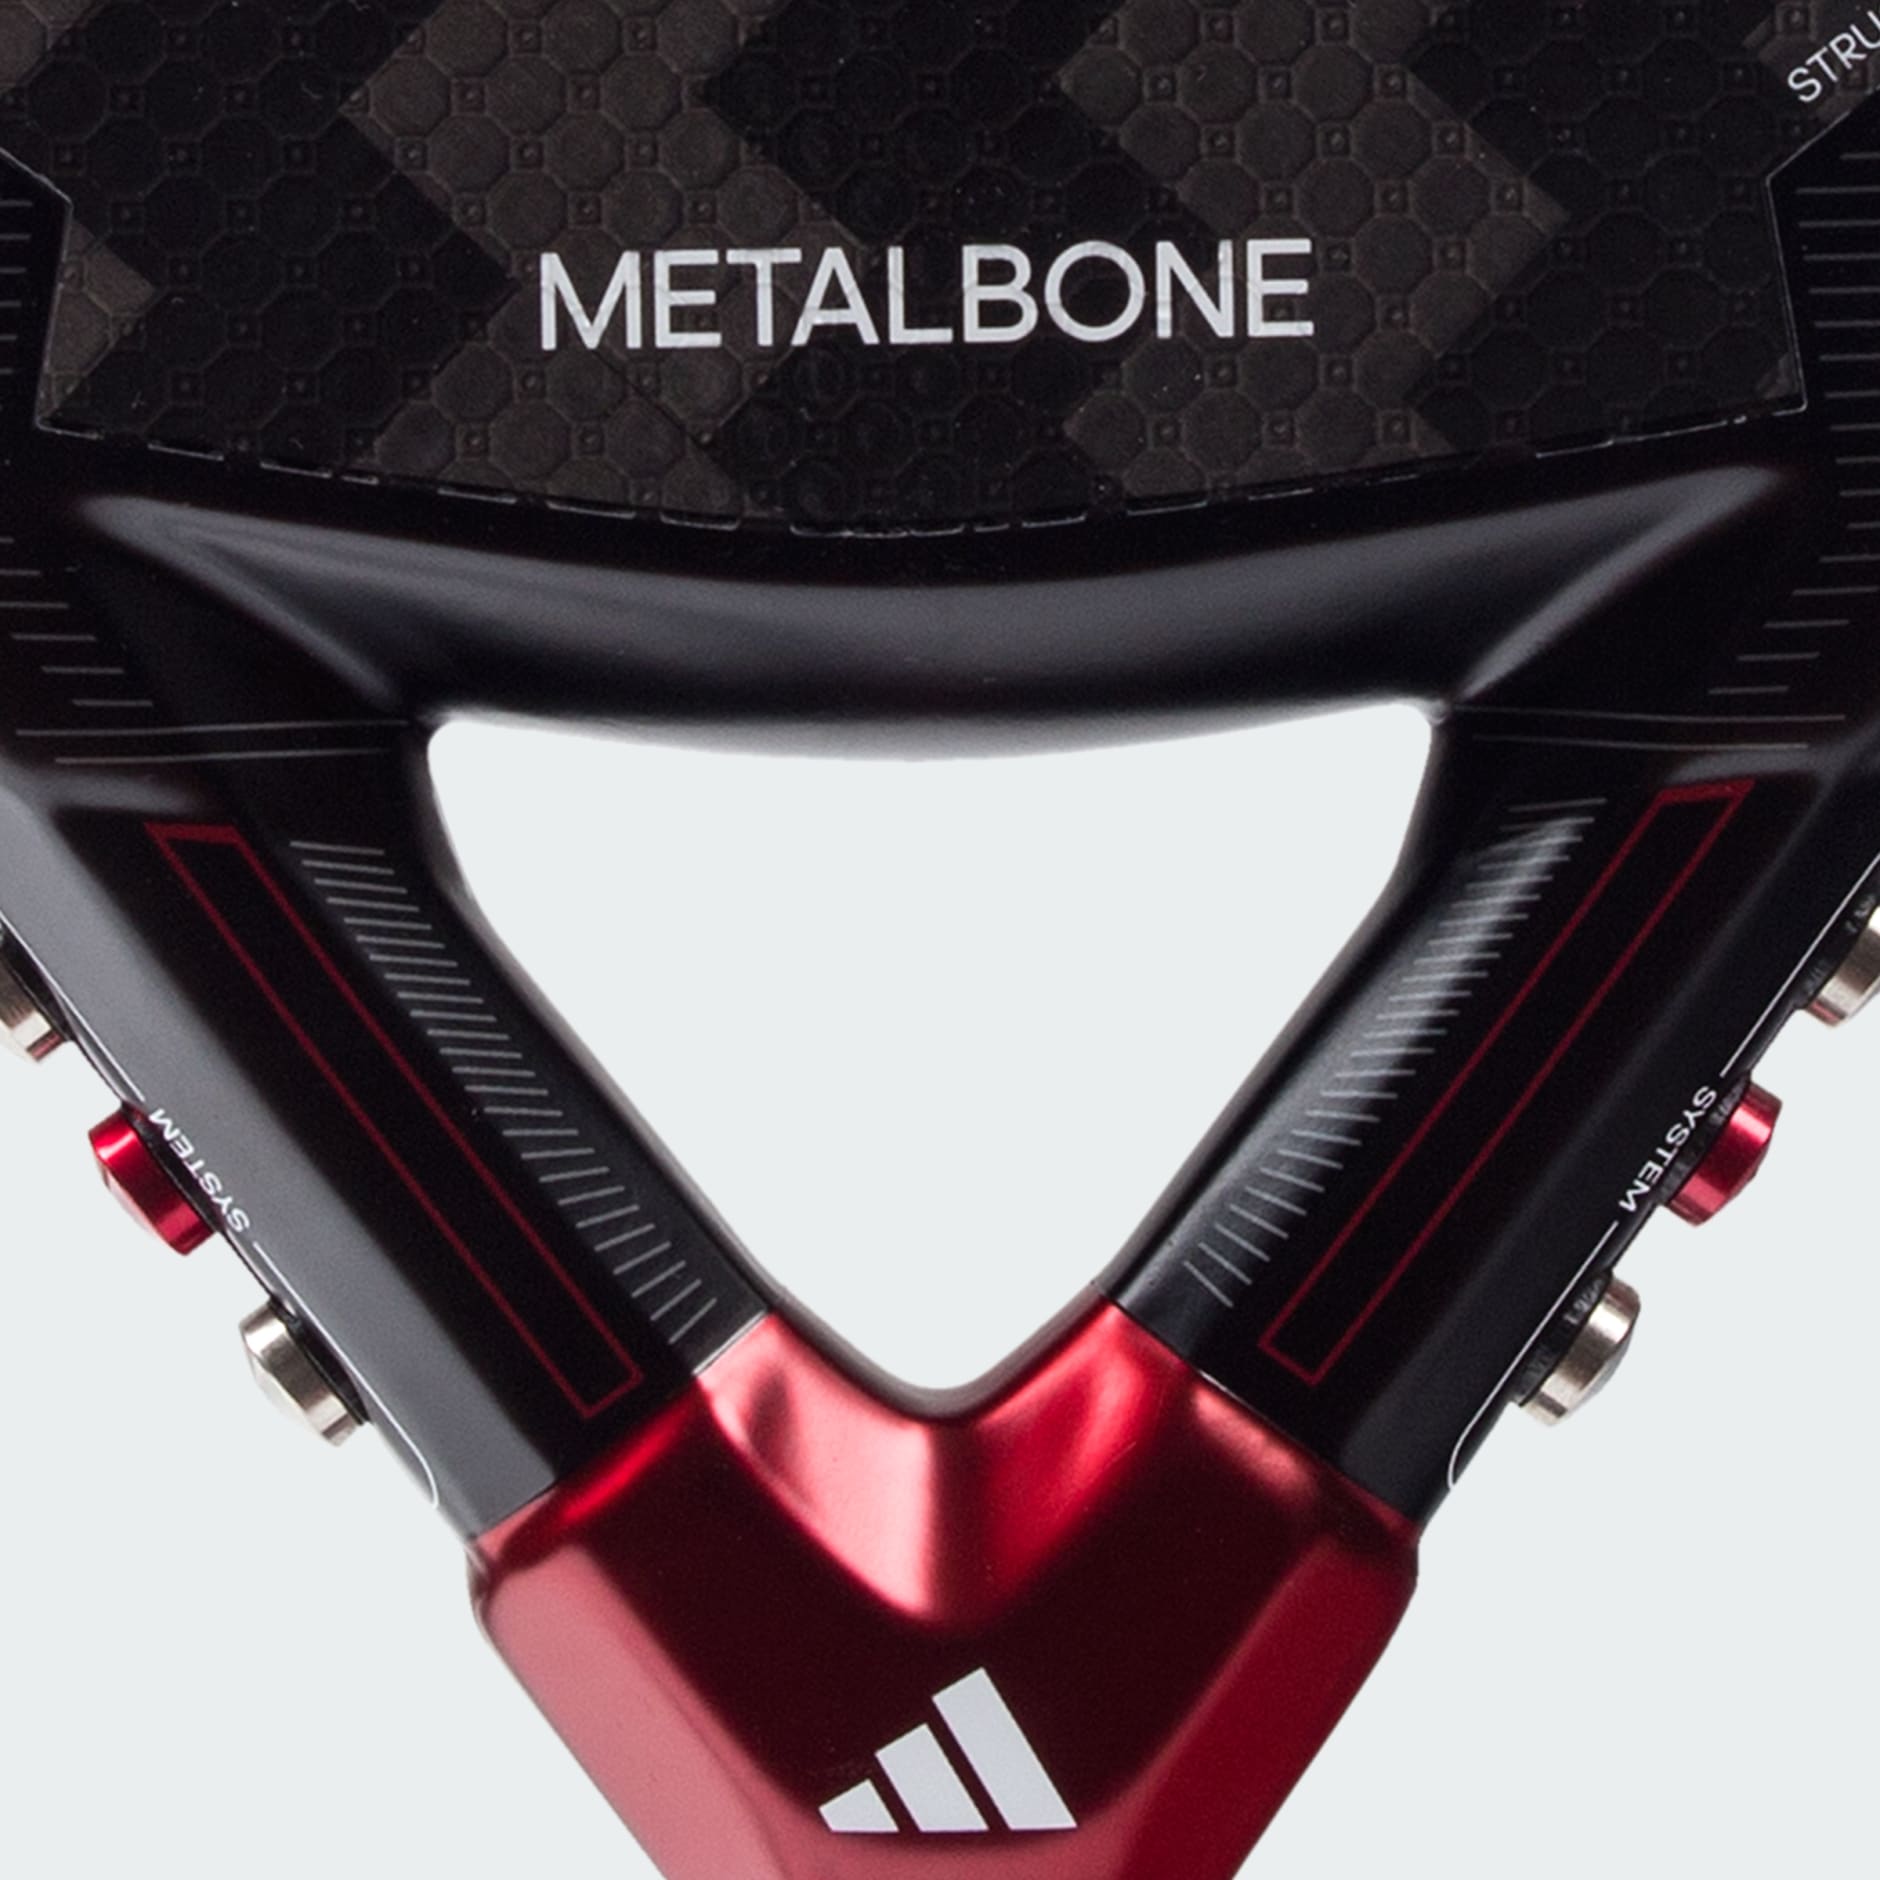 Pala de Padel Adidas Metalbone Carbon – The Padel Lab